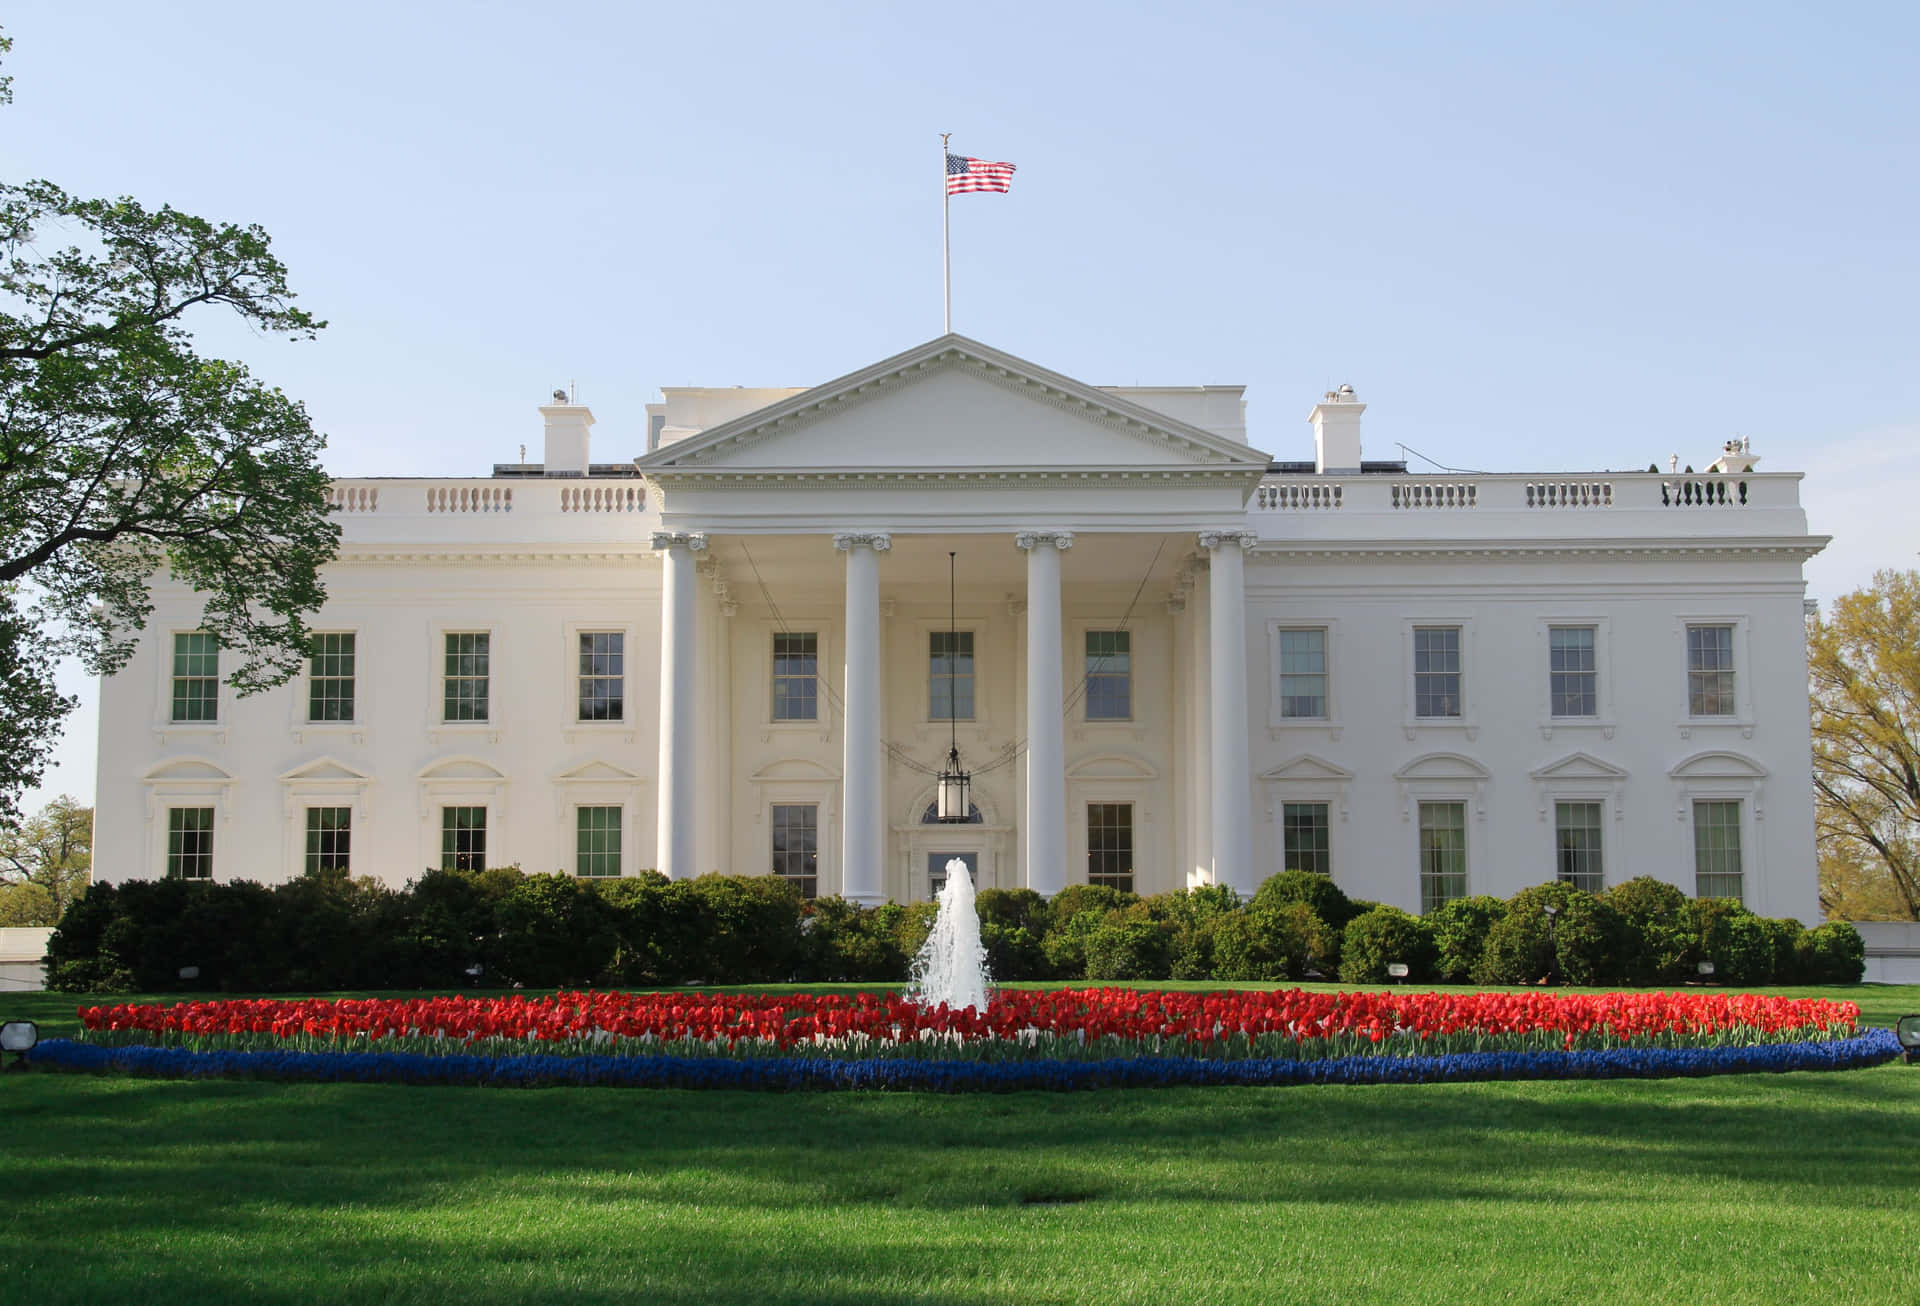 White House Images  Free Download on Freepik